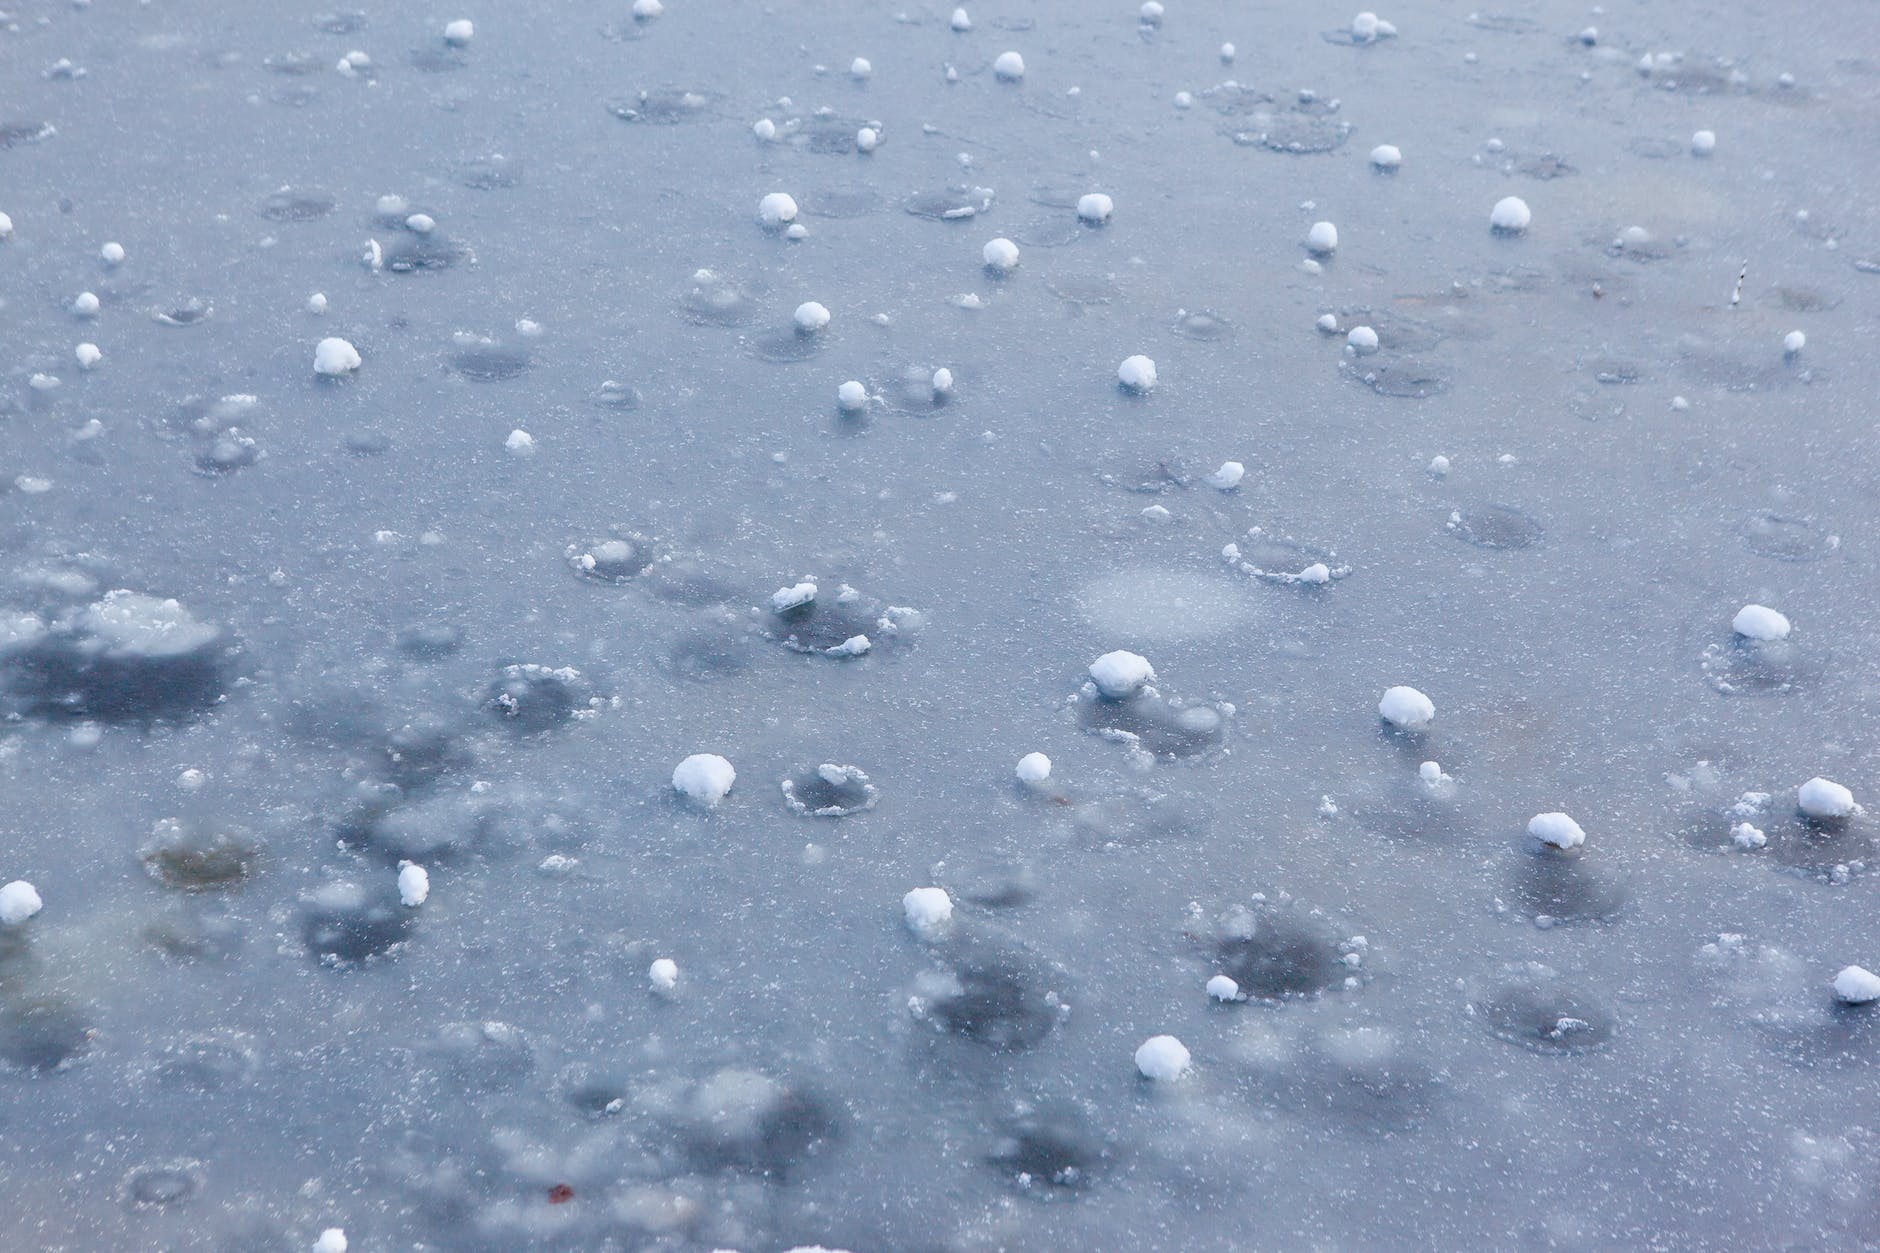 hail balls after heavy rain lying on ice